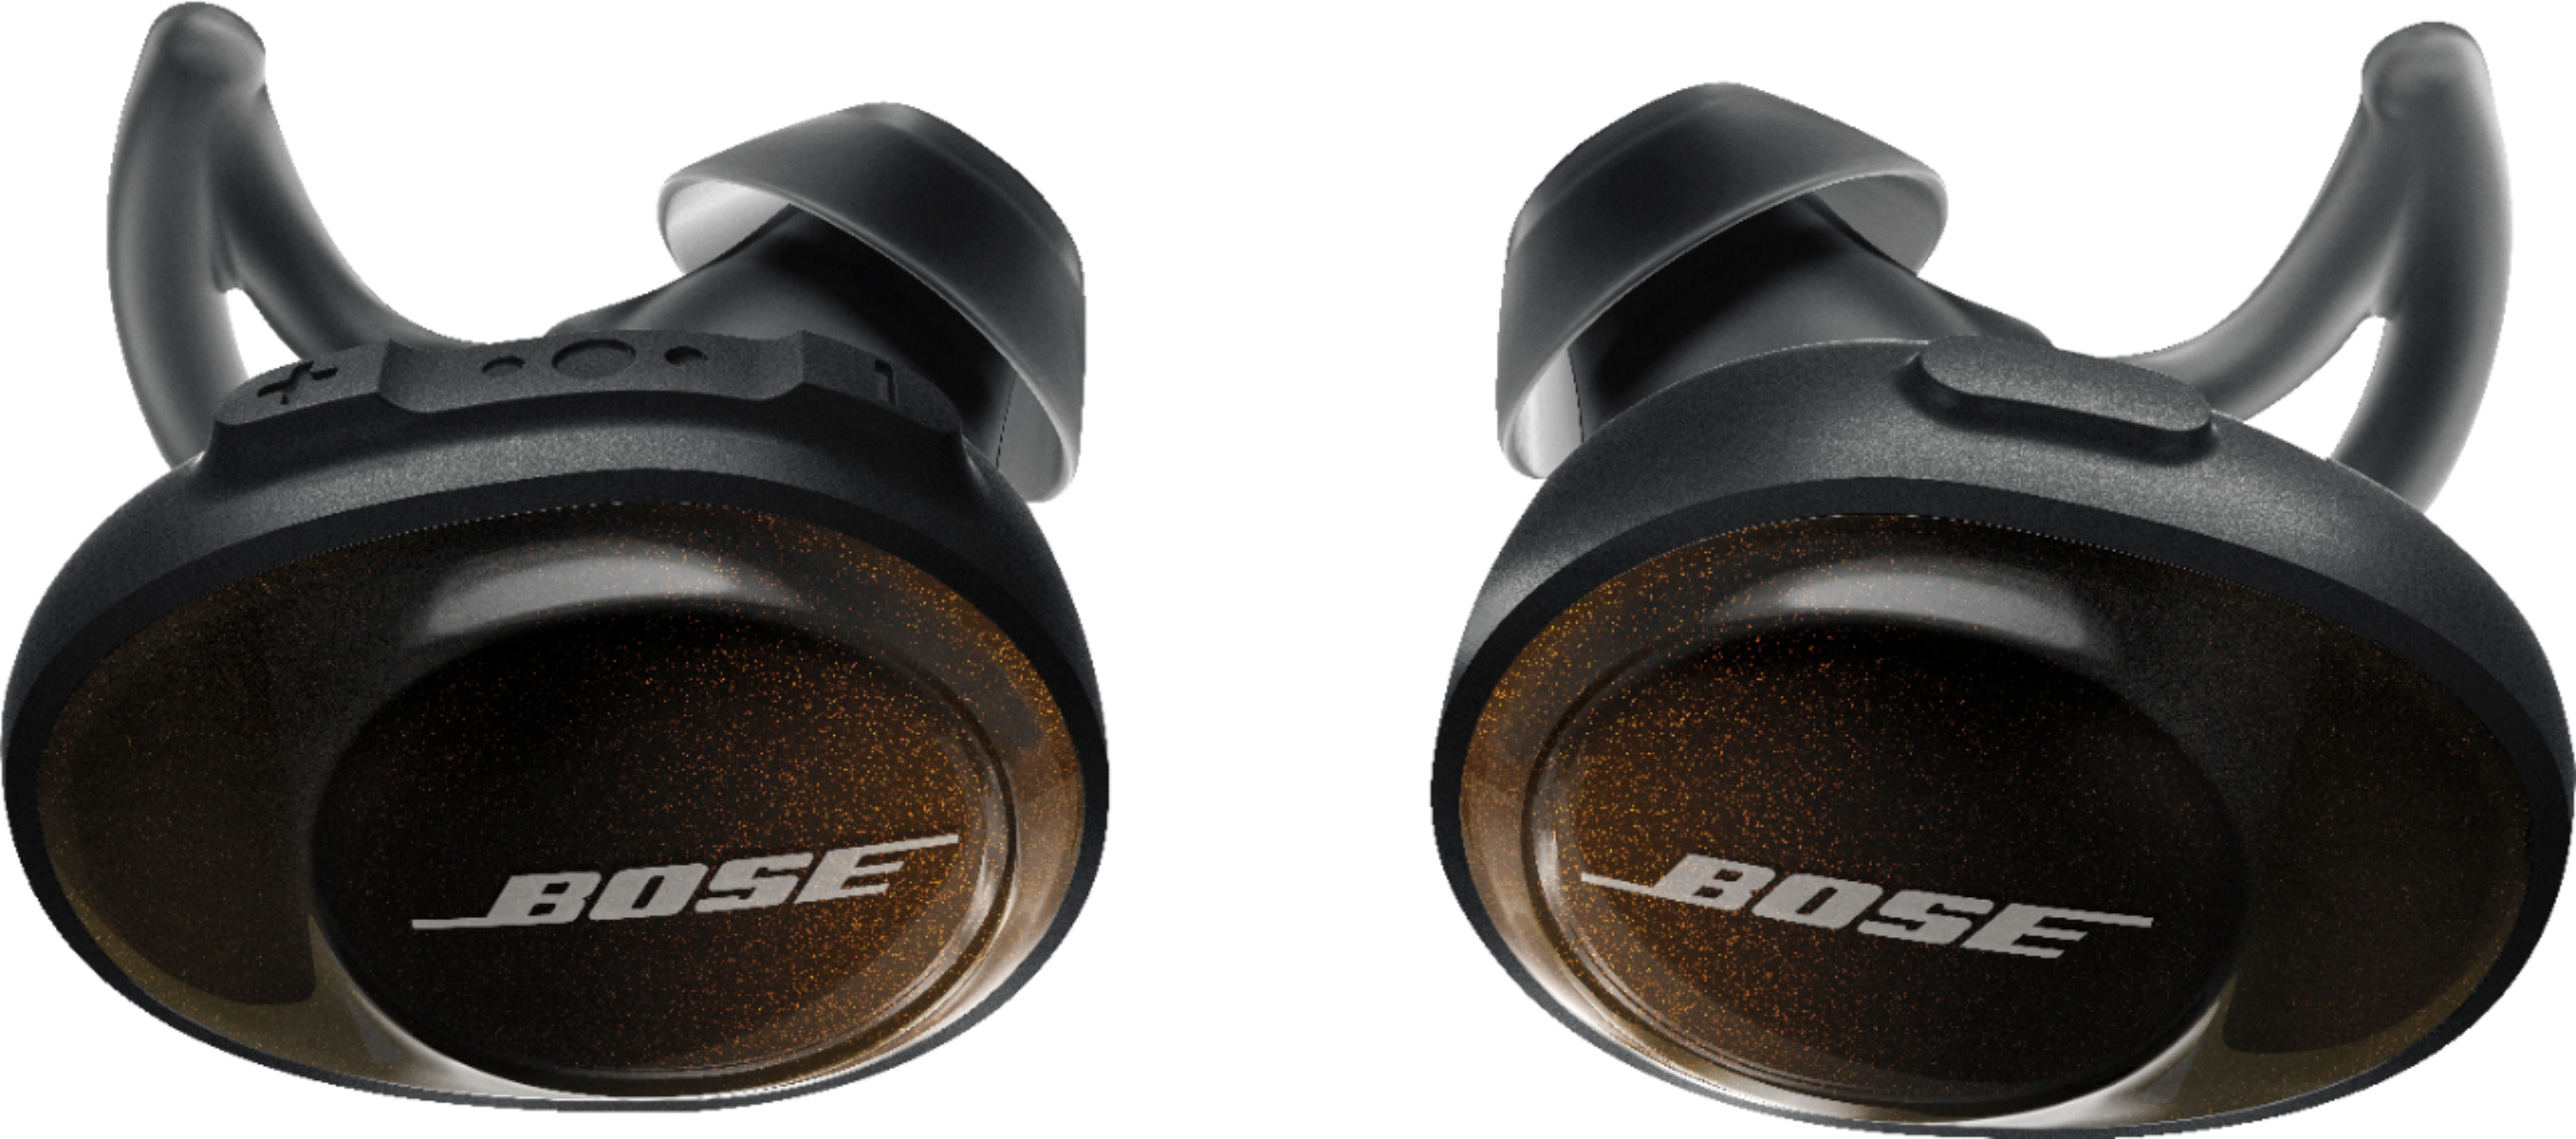 Bose SoundSport Free Wireless Earbuds Headphones Sport Bluetooth Earbuds  Black - International Society of Hypertension